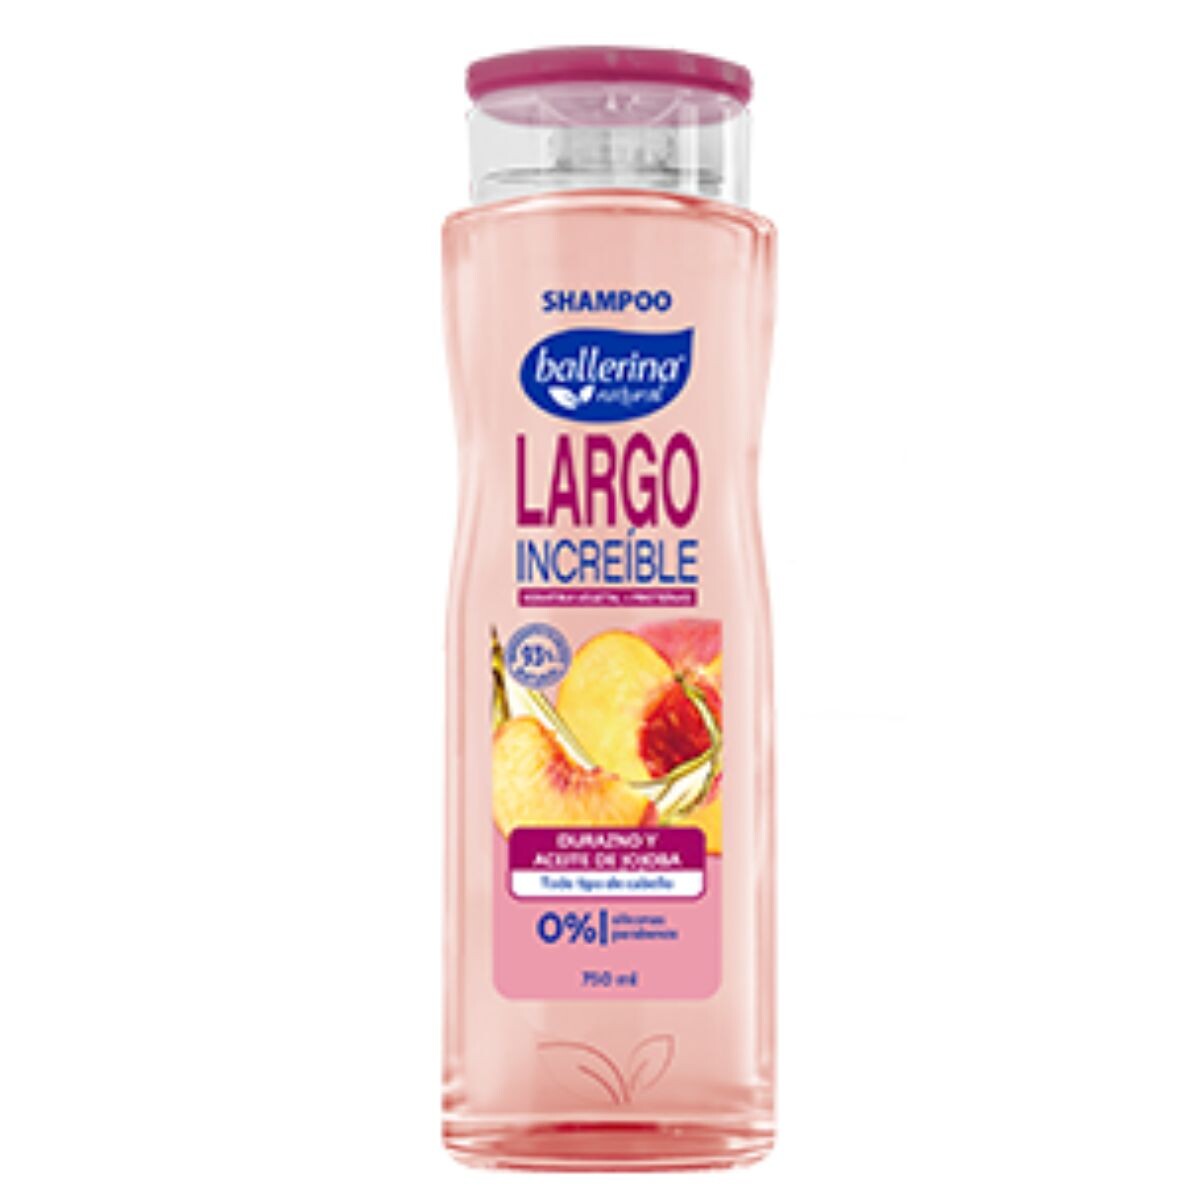 Shampoo Ballerina Largo Increíble Durazno y Aceite de Jojoba 750 ML 